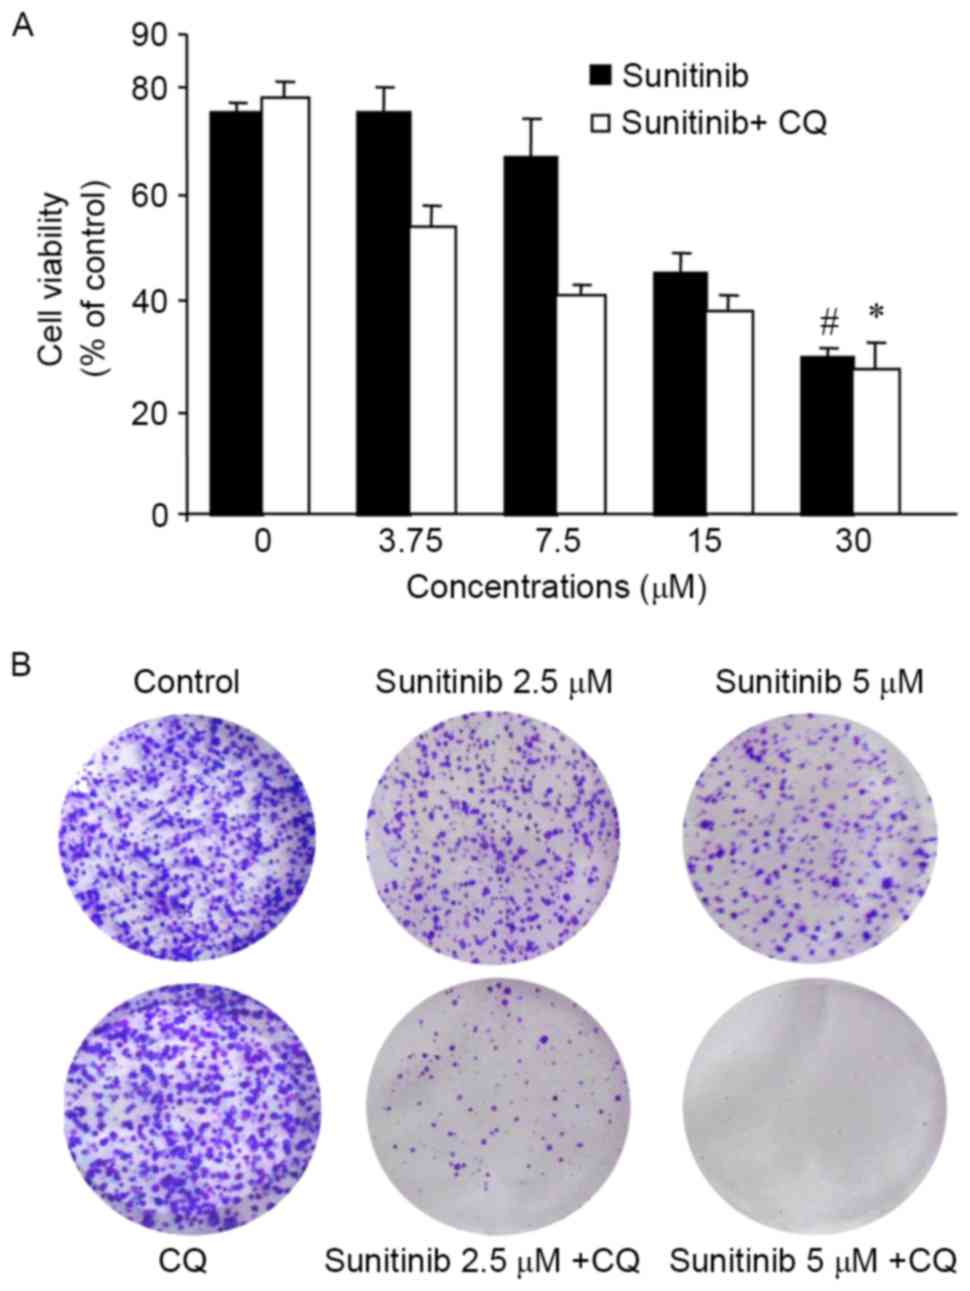 Chloroquine potentiates the anticancer effect of sunitinib 